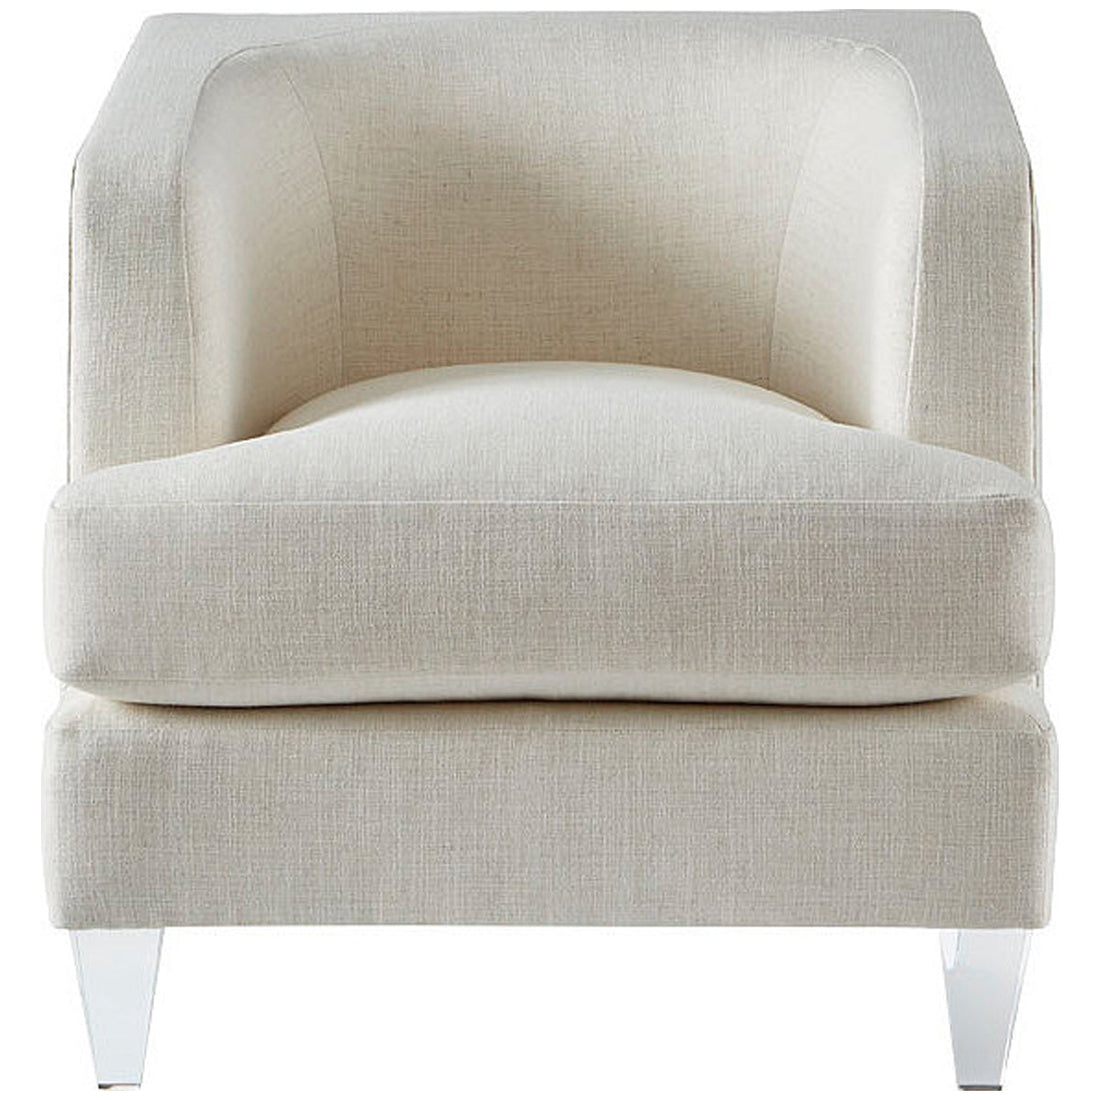 Baker Furniture Taylor Lounge Chair with Acrylic Leg BAU3102C